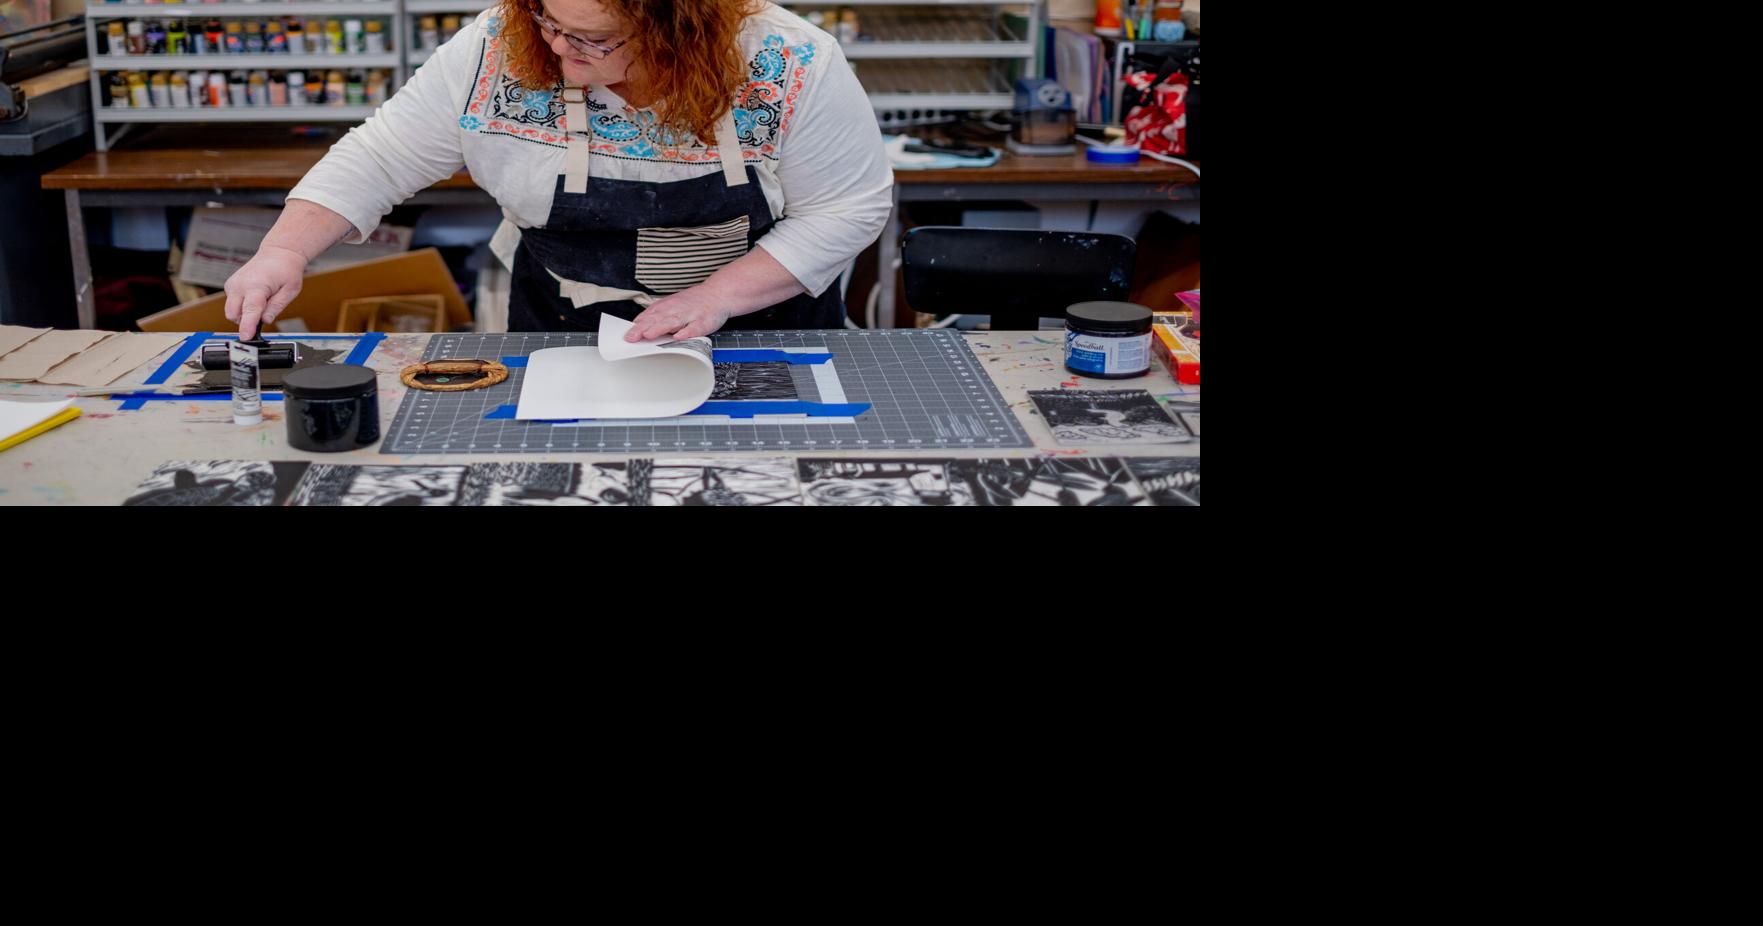 Marie Pratuch of Pendleton survives through art | Local News